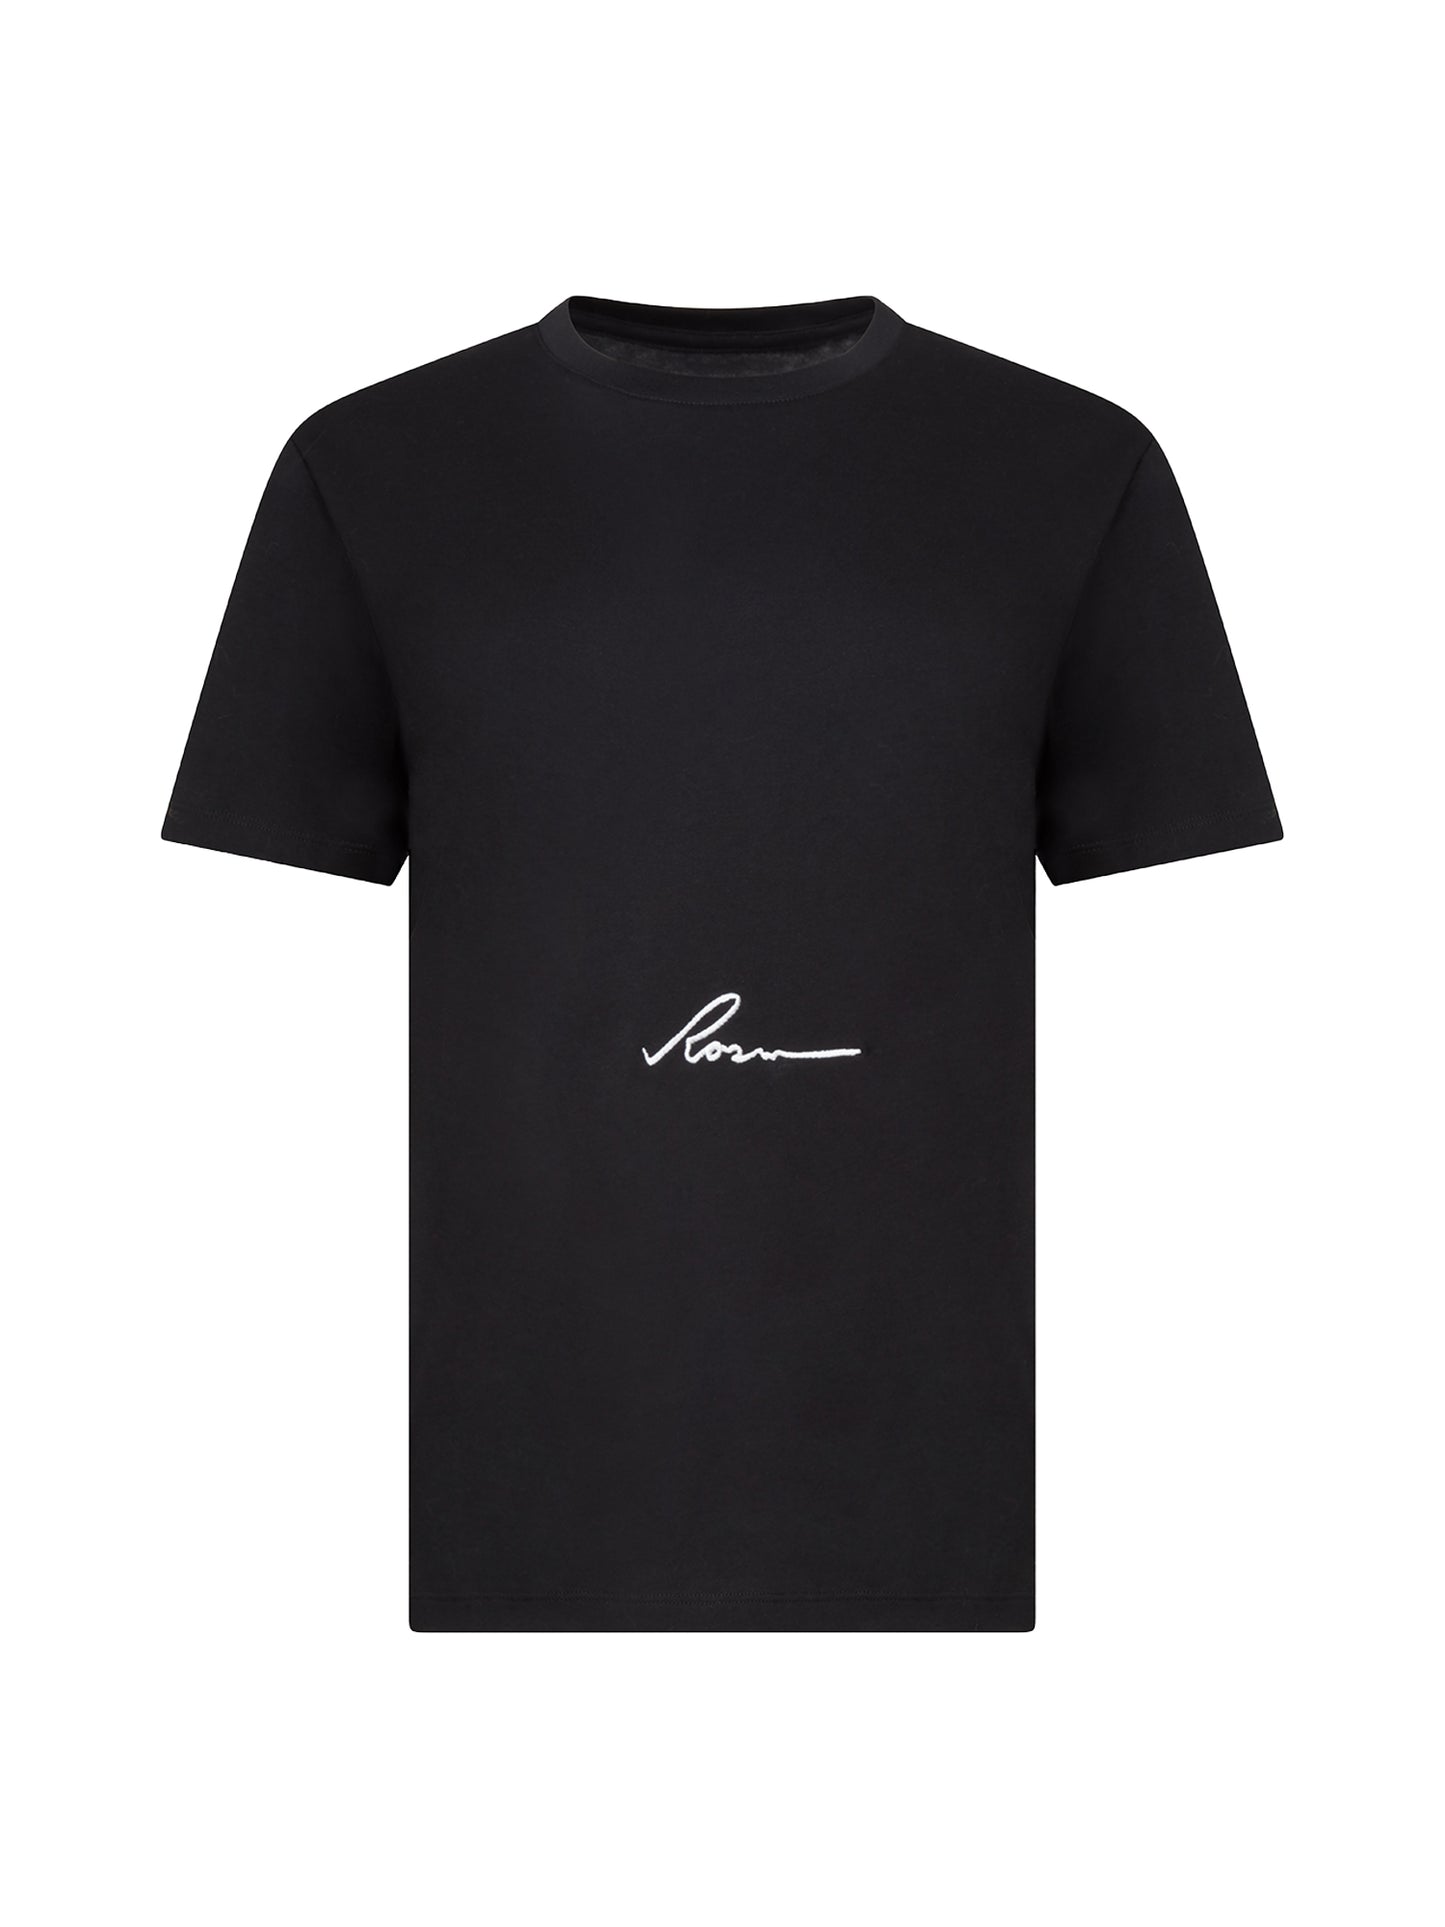 rosin studios black logo embroidered t shirt tee